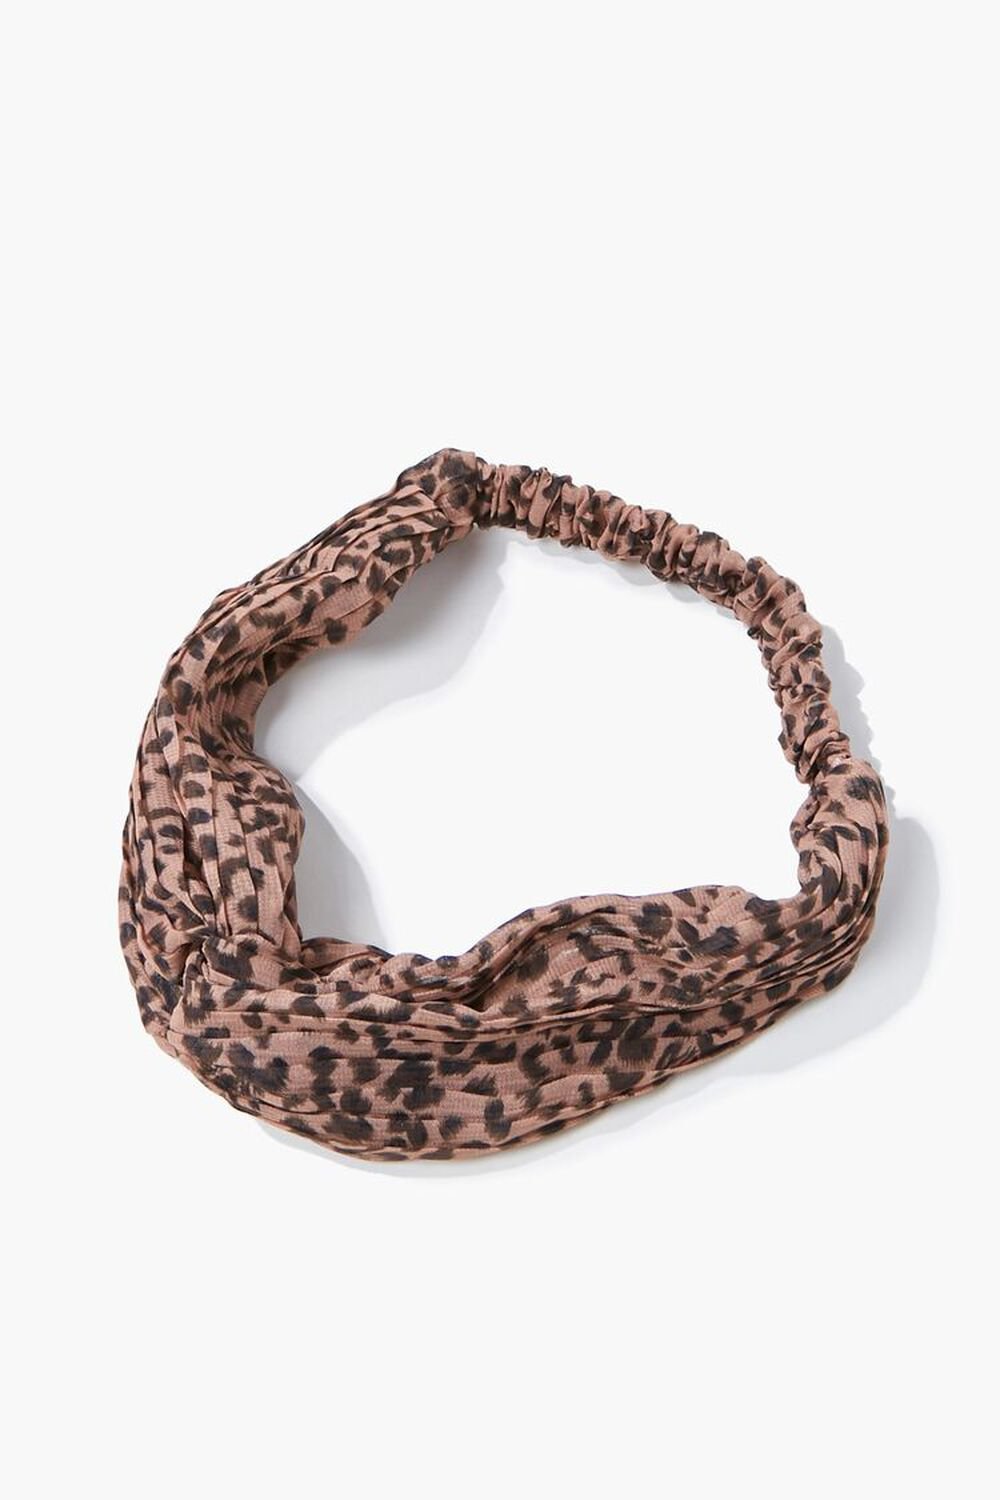 BROWN/MULTI Leopard Print Headwrap, image 1